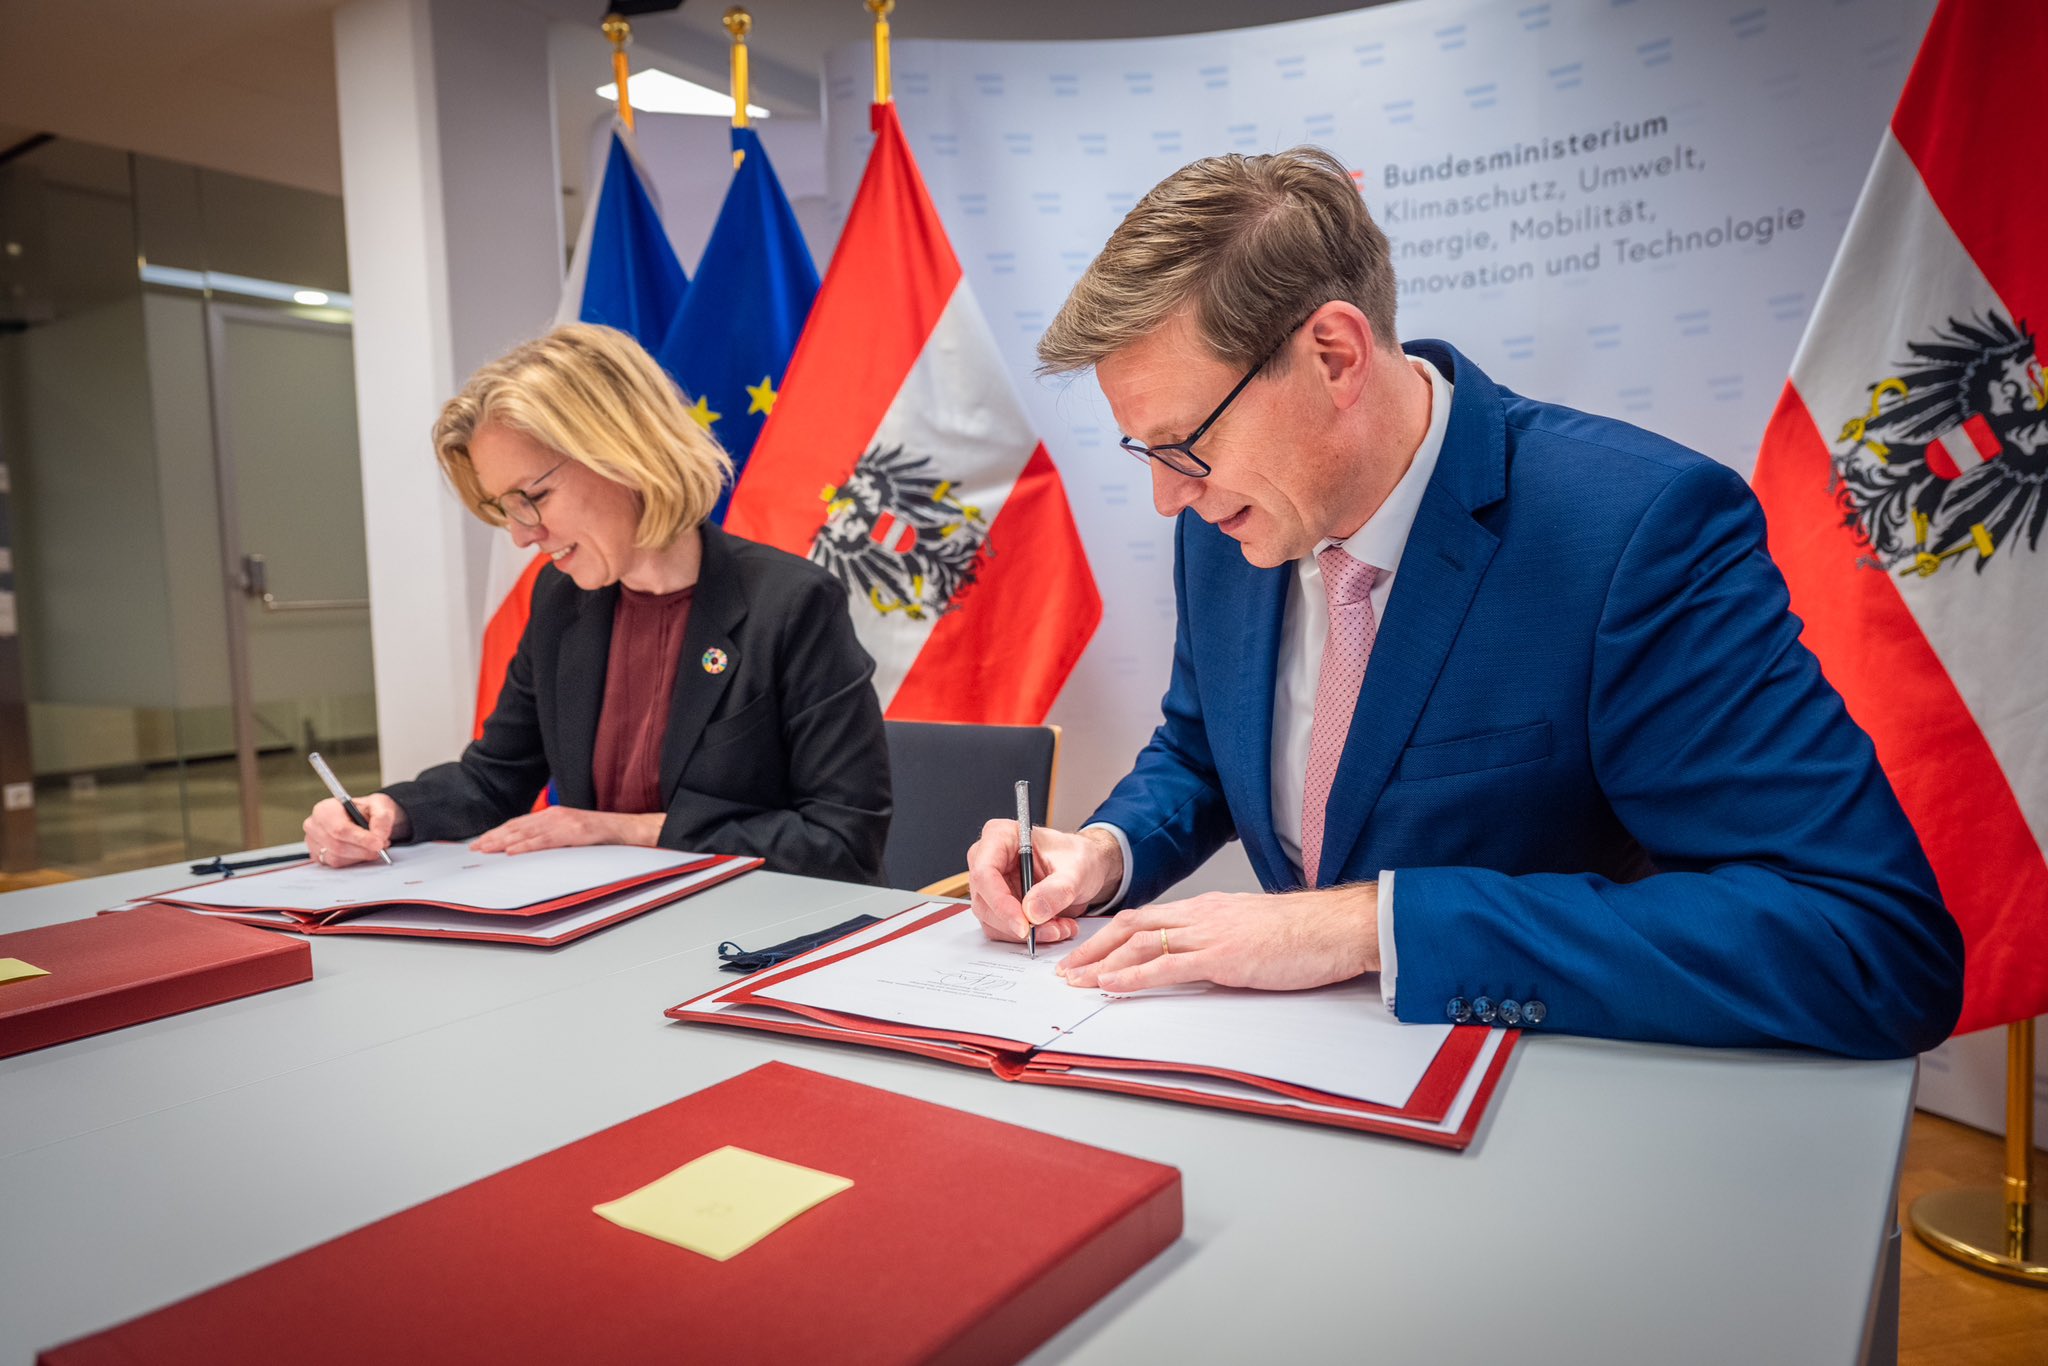 Austrian minister Gewessler and Czech minister Kupka sign the agreement 